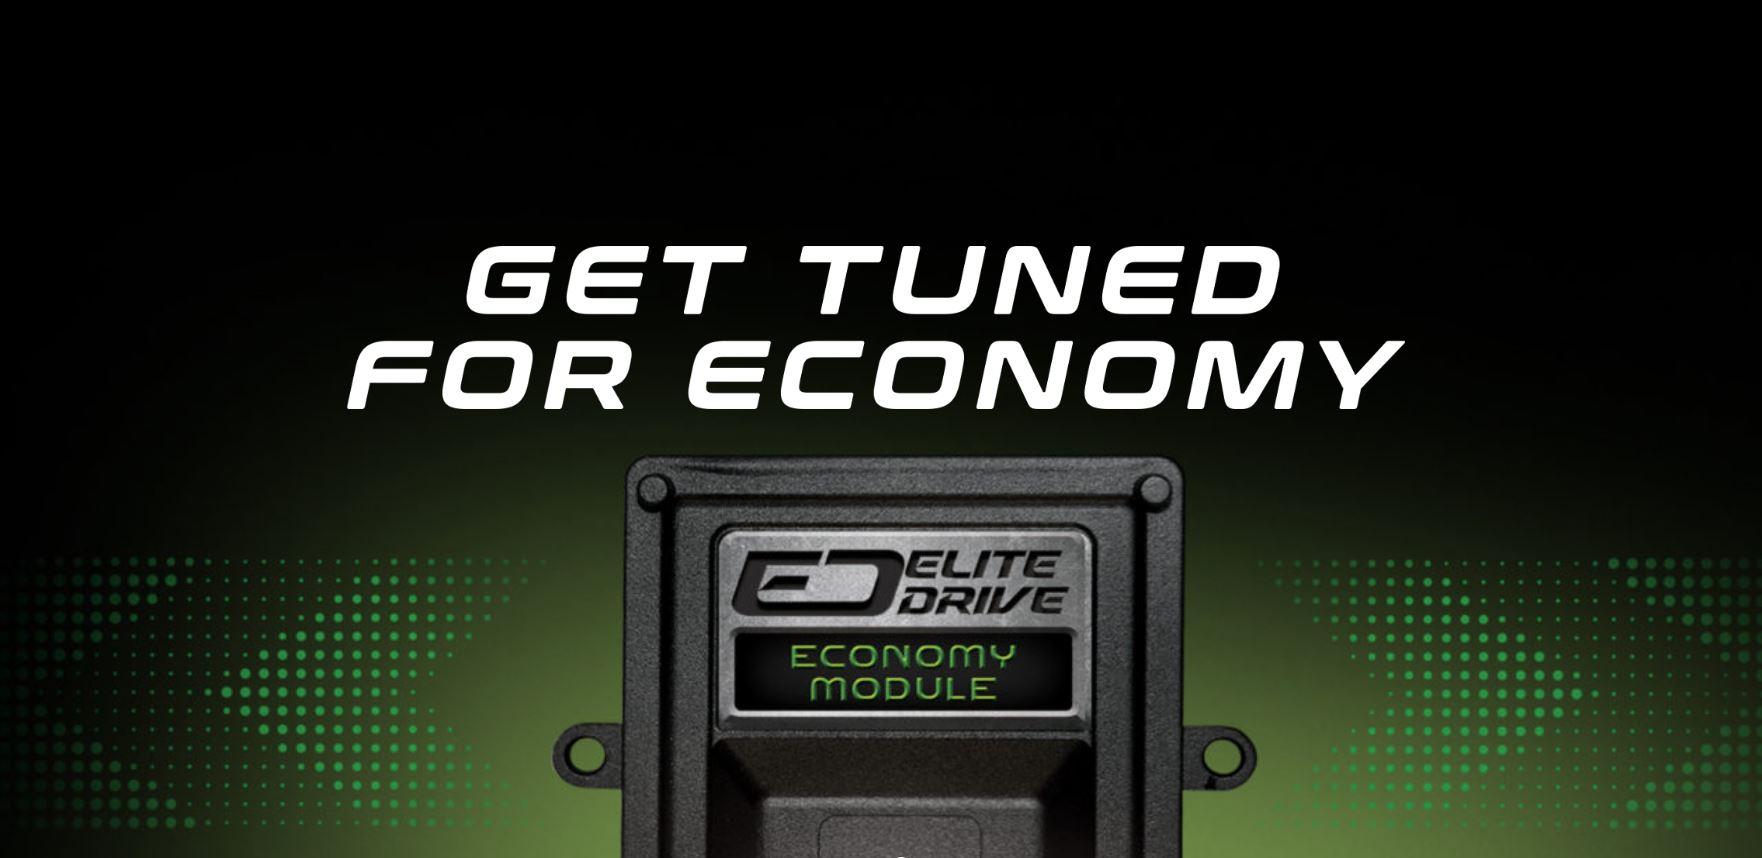 elite drive power diesel economy module features 